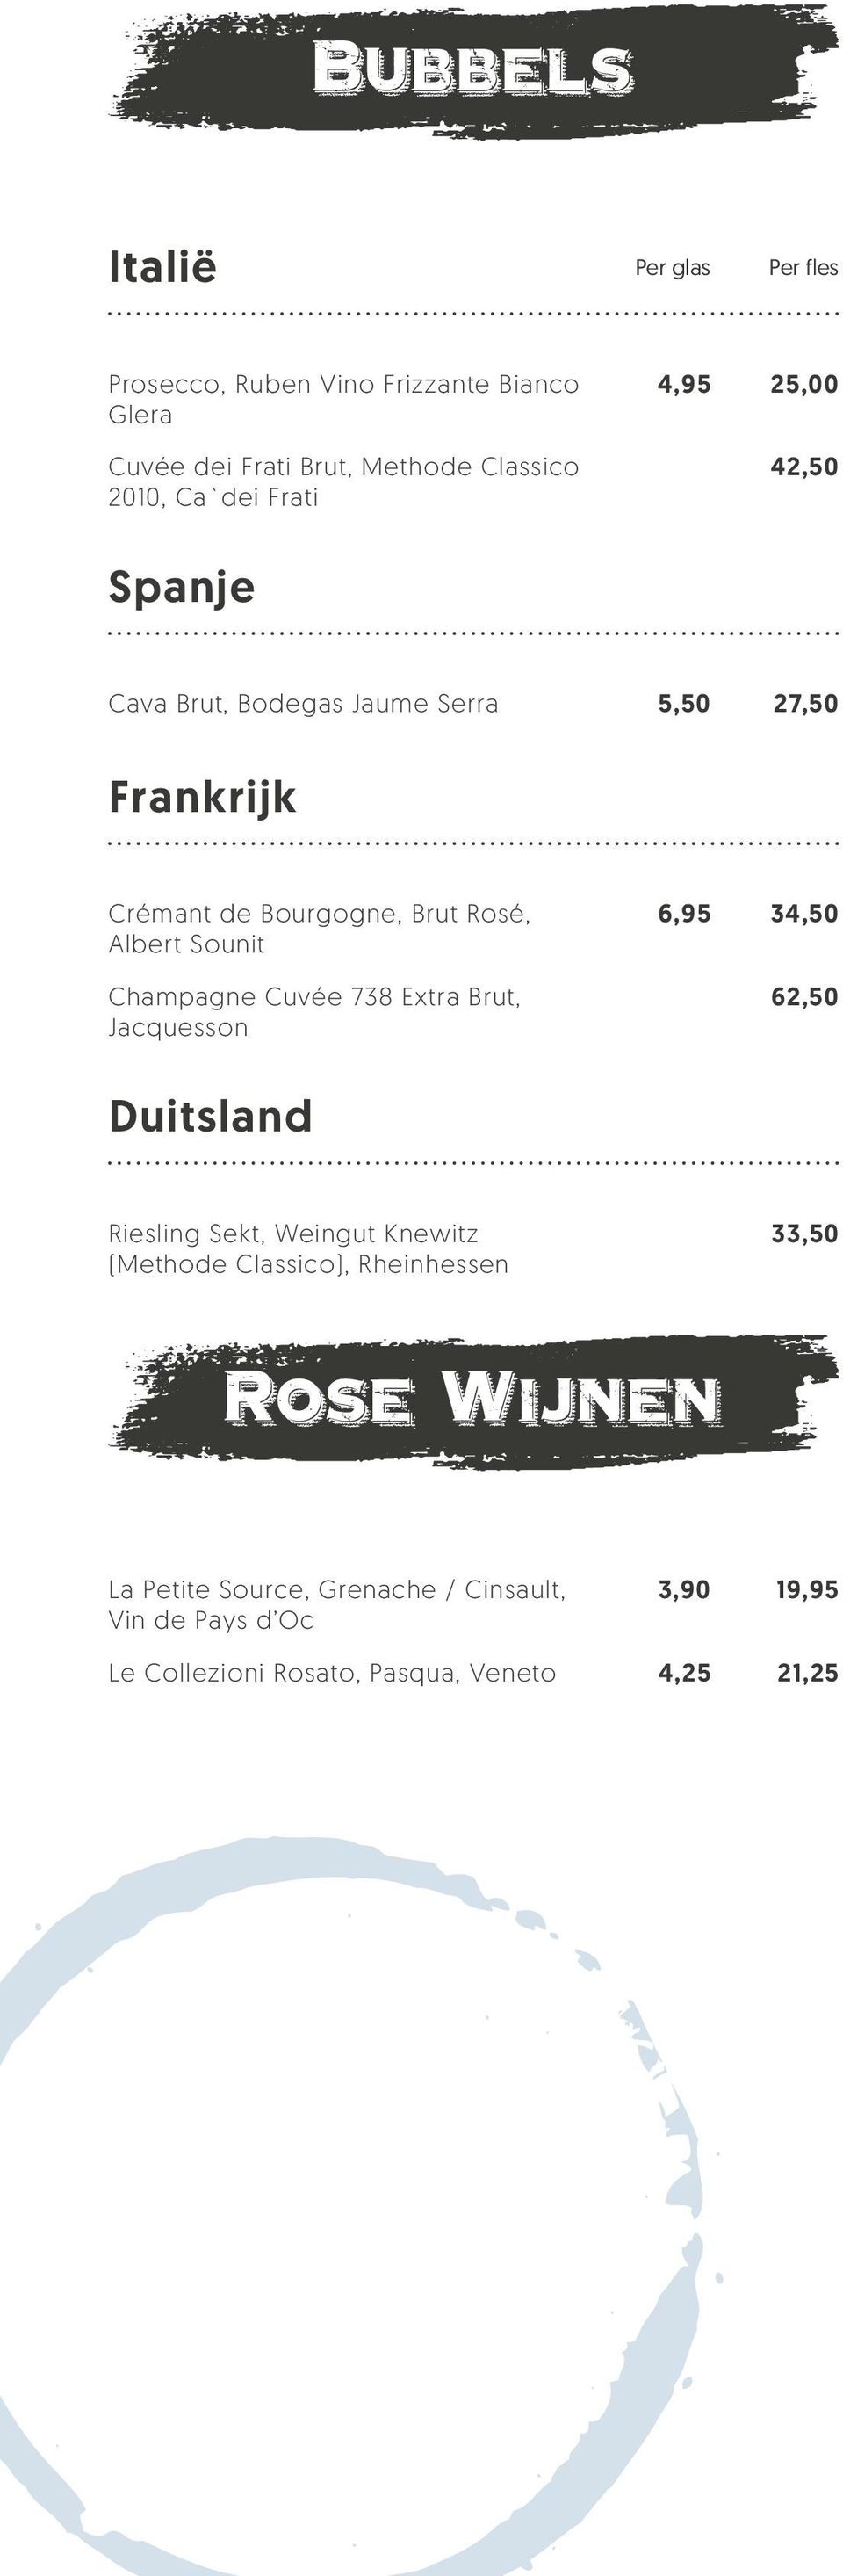 Sounit Champagne Cuvée 738 Extra Brut, Jacquesson 6,95 34,50 62,50 Duitsland Riesling Sekt, eingut Knewitz (Methode